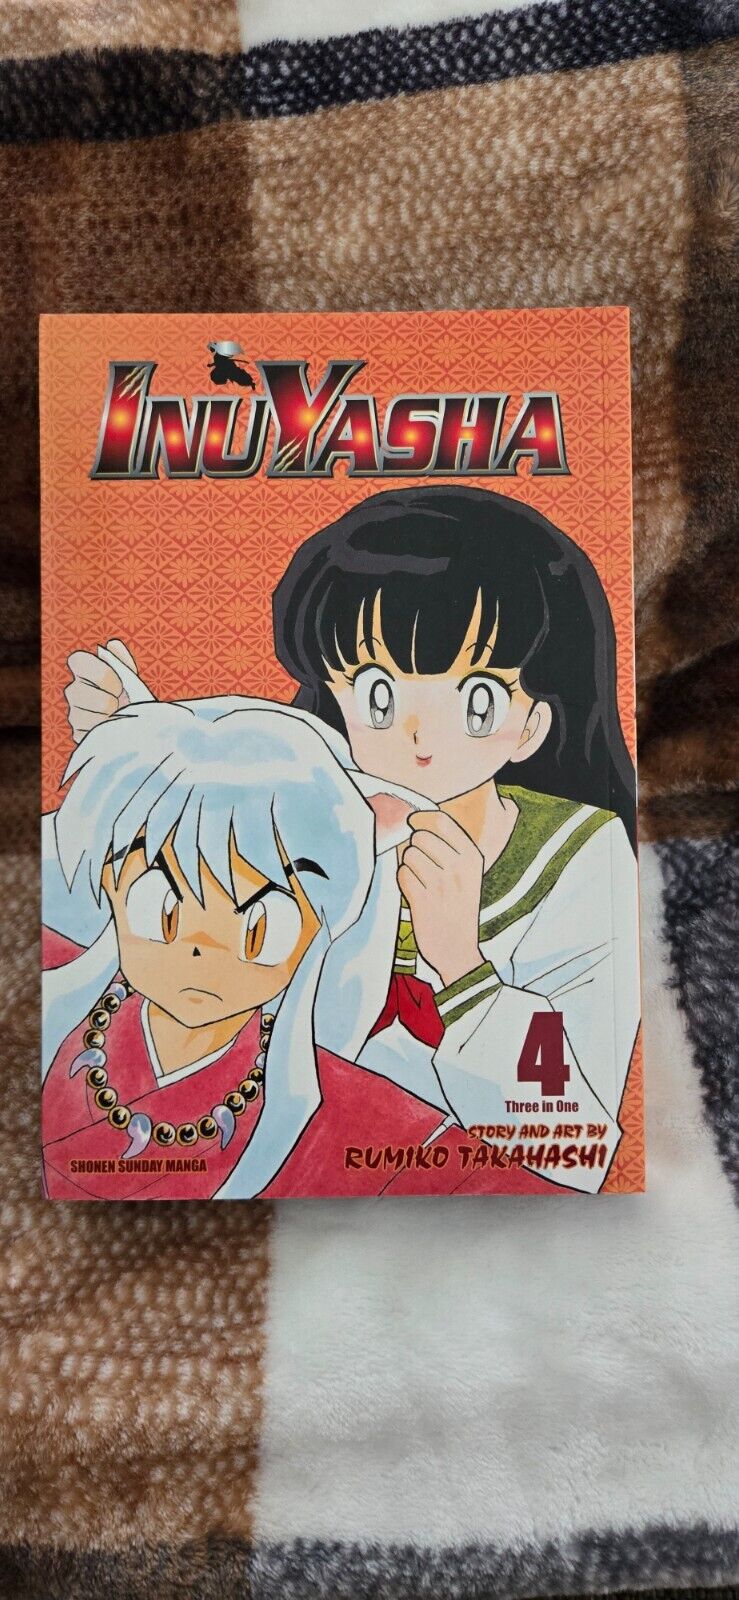 Inuyasha 3 in 1 Manga Vol 4 by Rumiko Takahashi